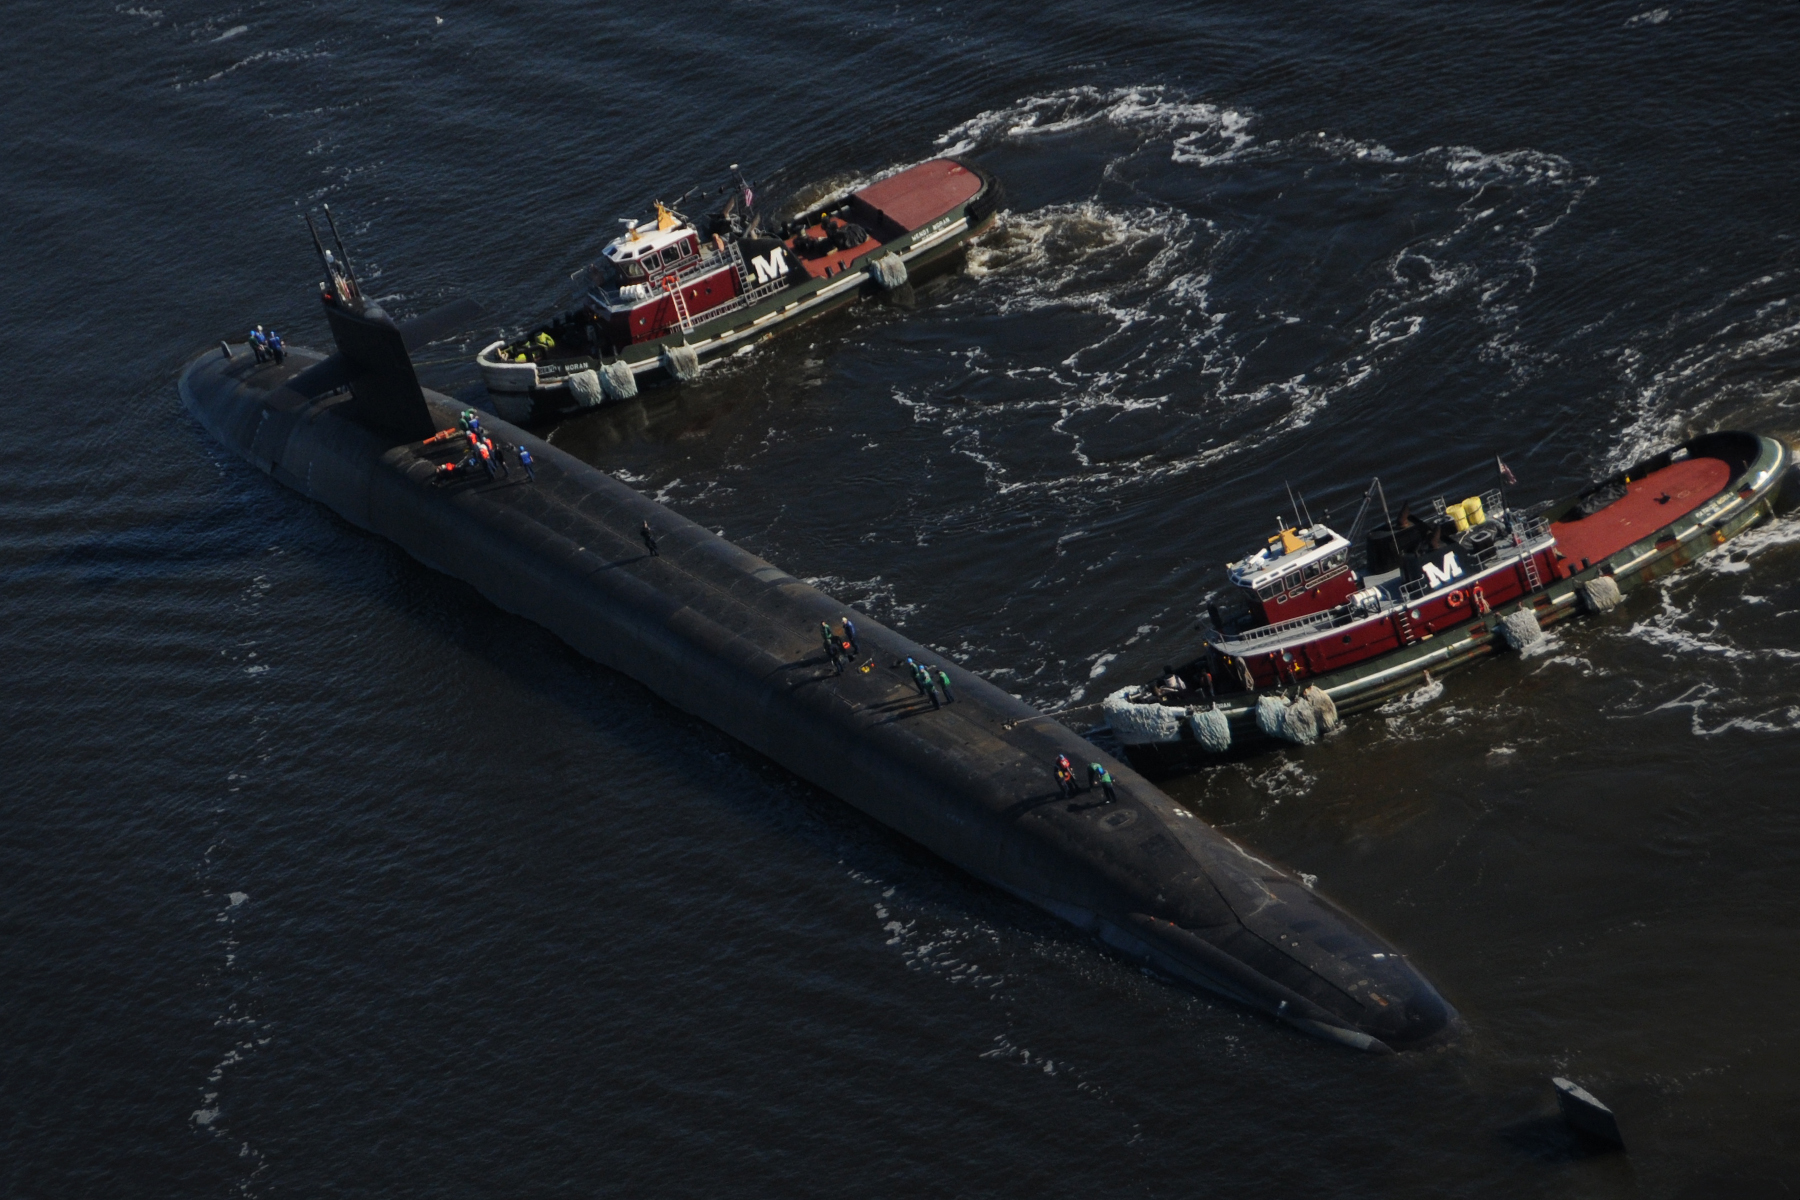 The Ohio-class ballistic-missile submarine USS West Virginia (SSBN 736) departs Norfolk Naval Shipyard in Portsmouth, Va. following an engineering refueling overhaul on Oct. 24, 2013. US Navy photo.